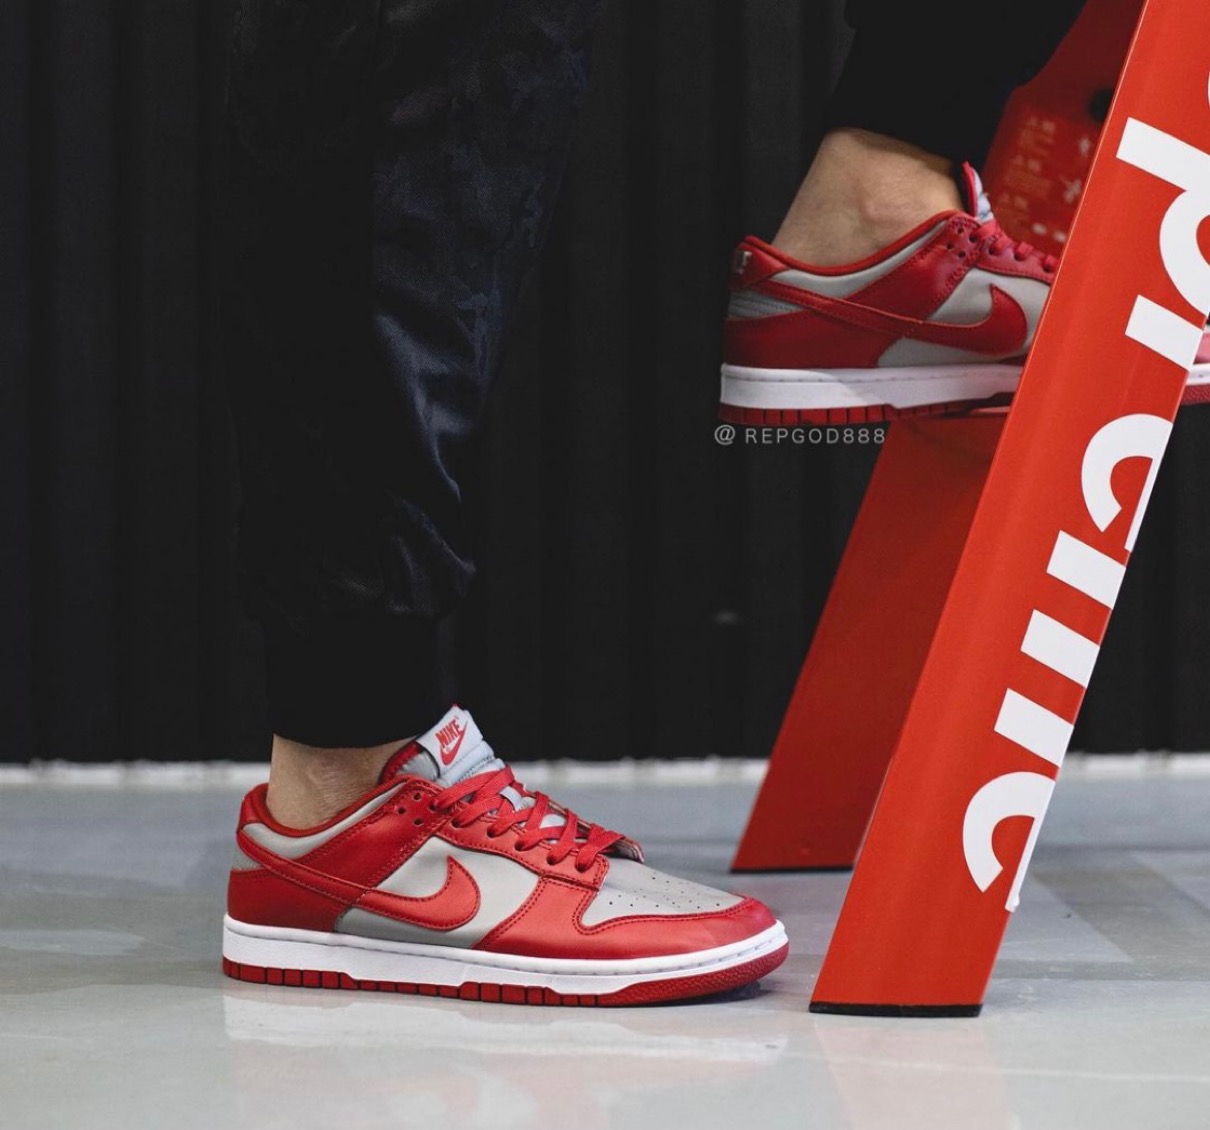 Nike】Dunk Low Retro “UNLV”が国内2021年1月5日/1月7日に発売予定 